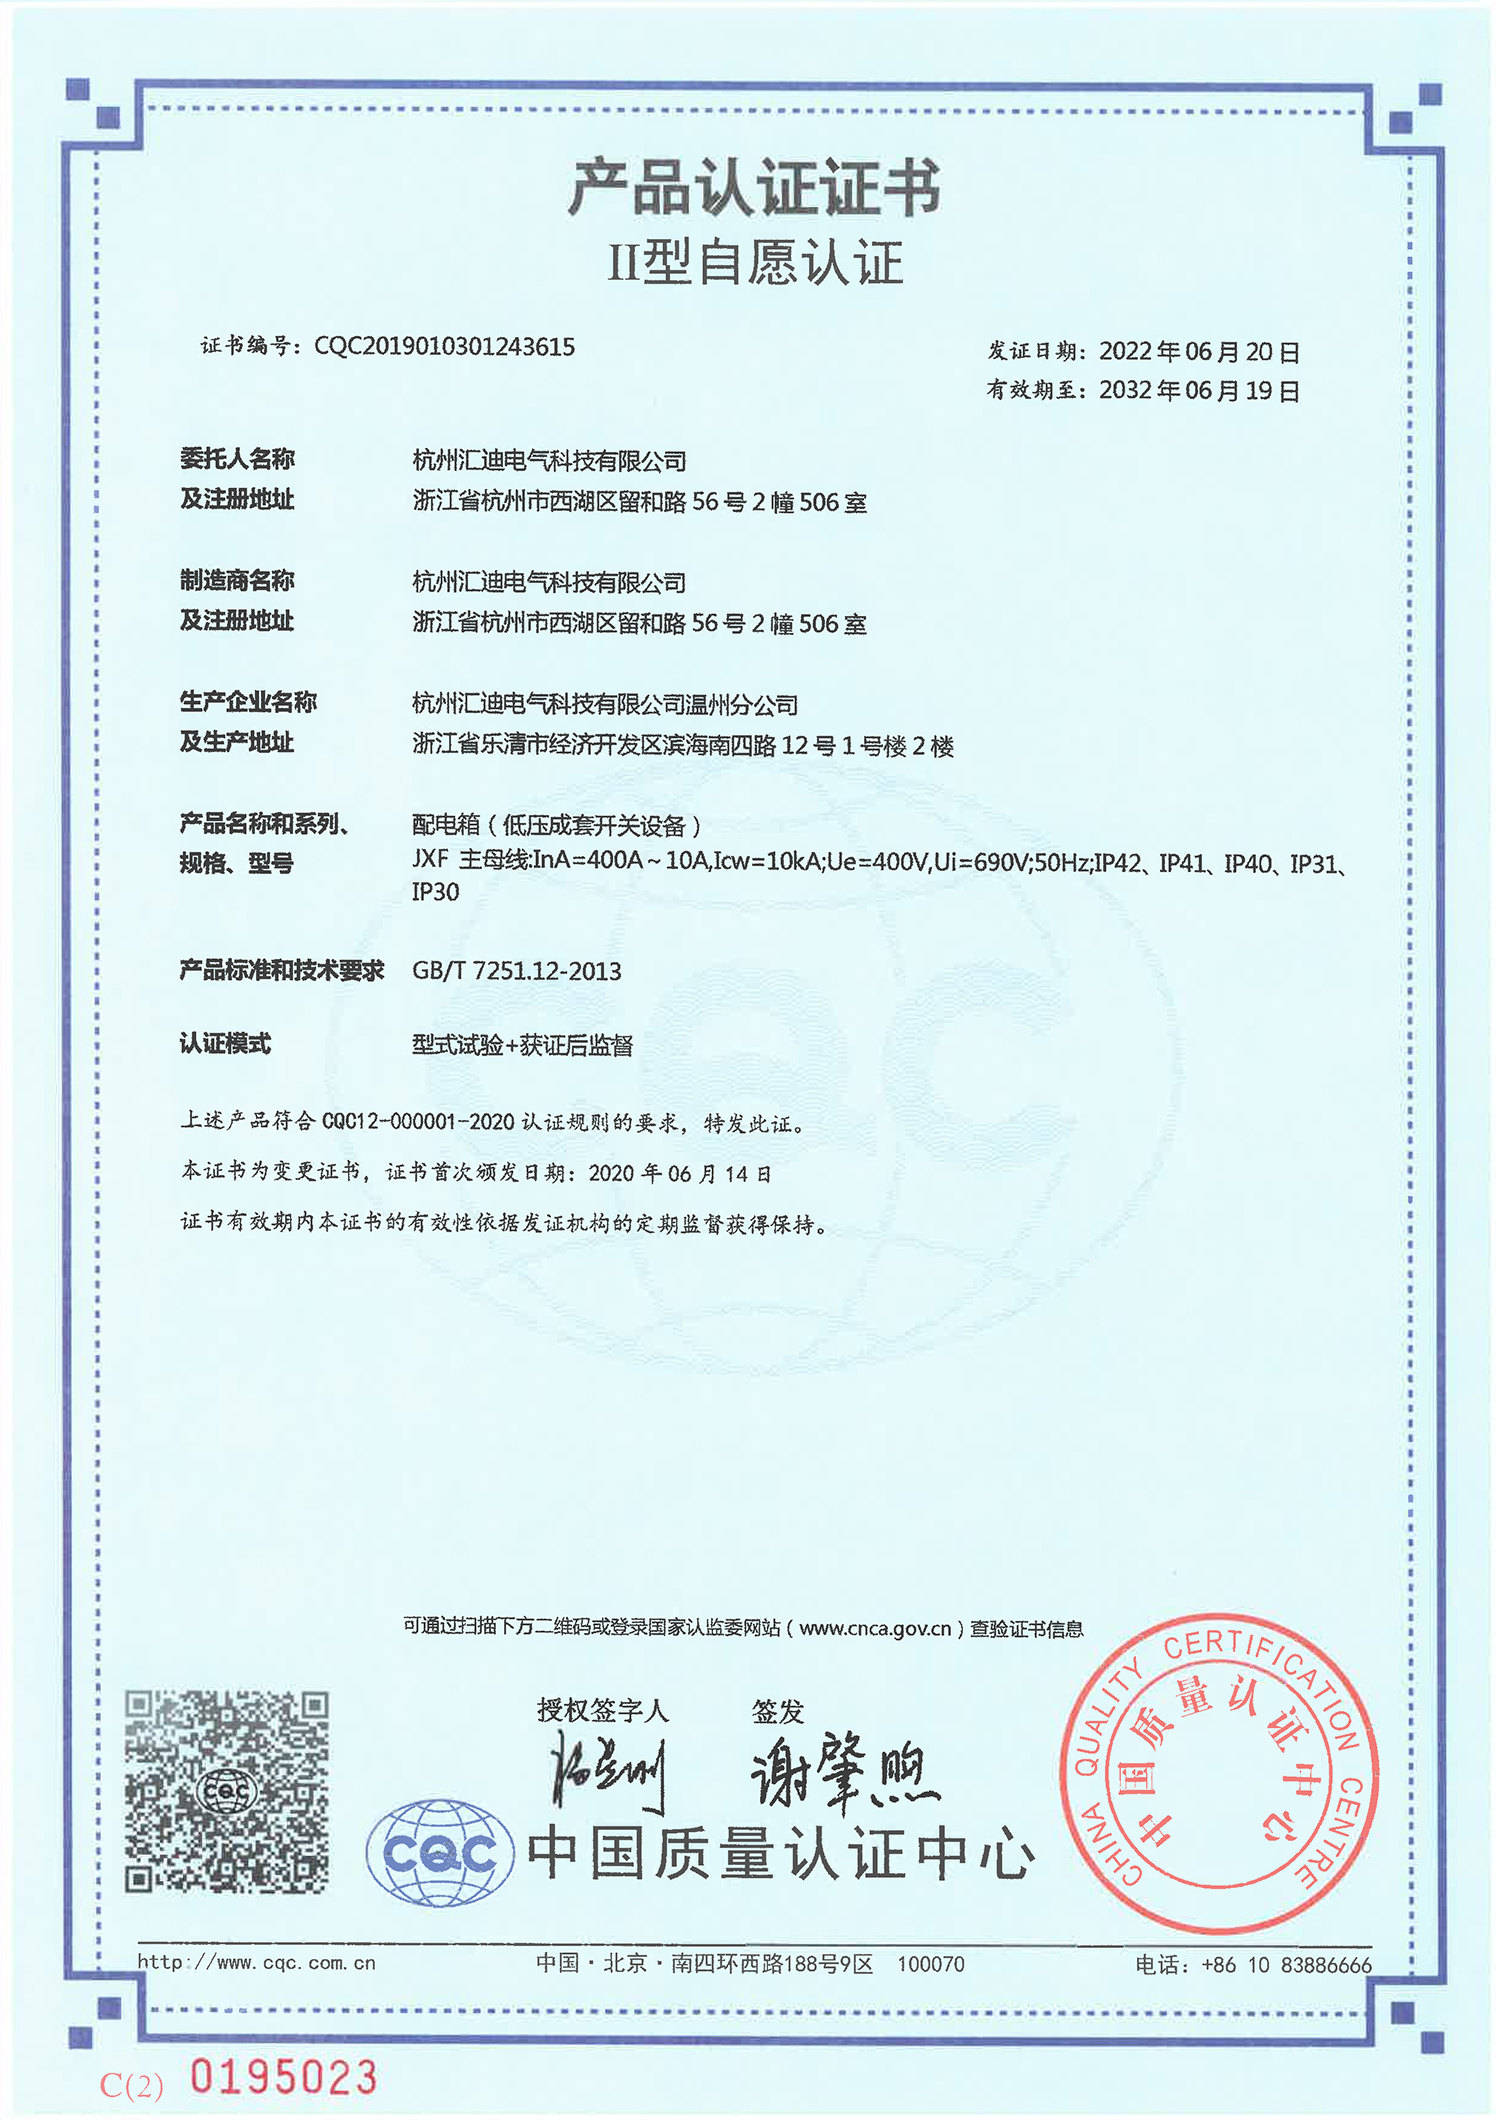 huud certificate 7